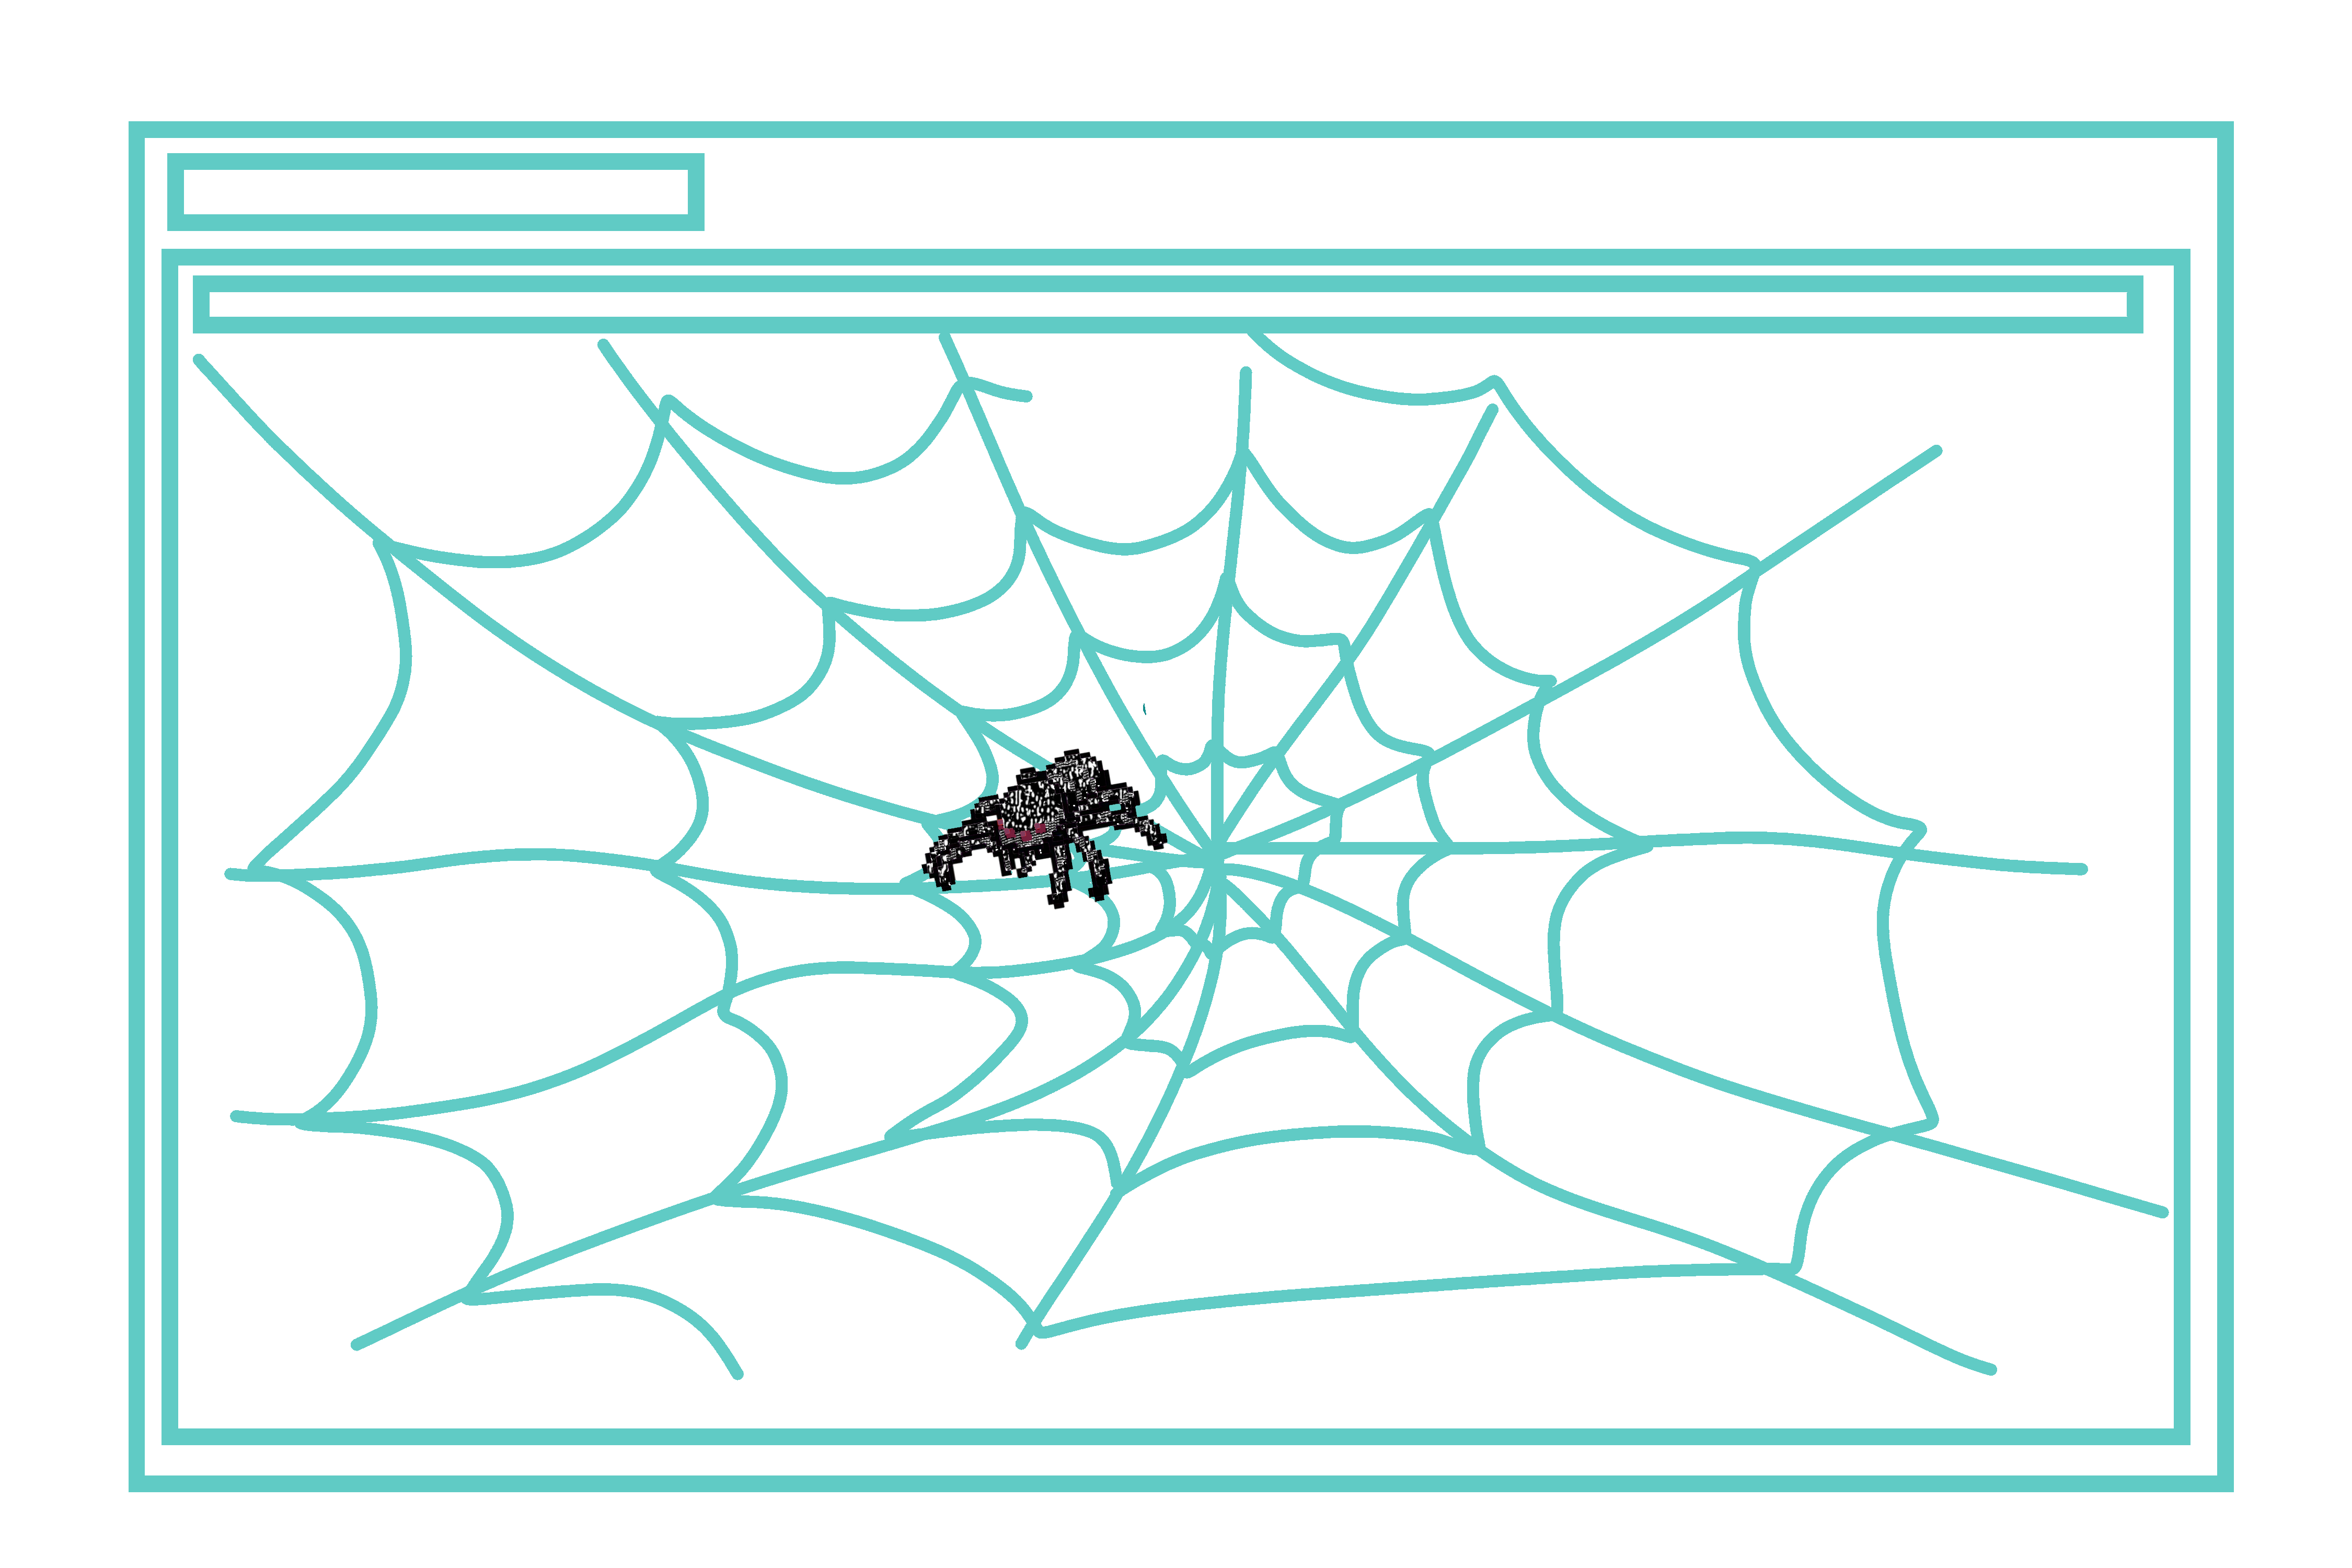 spiderweb